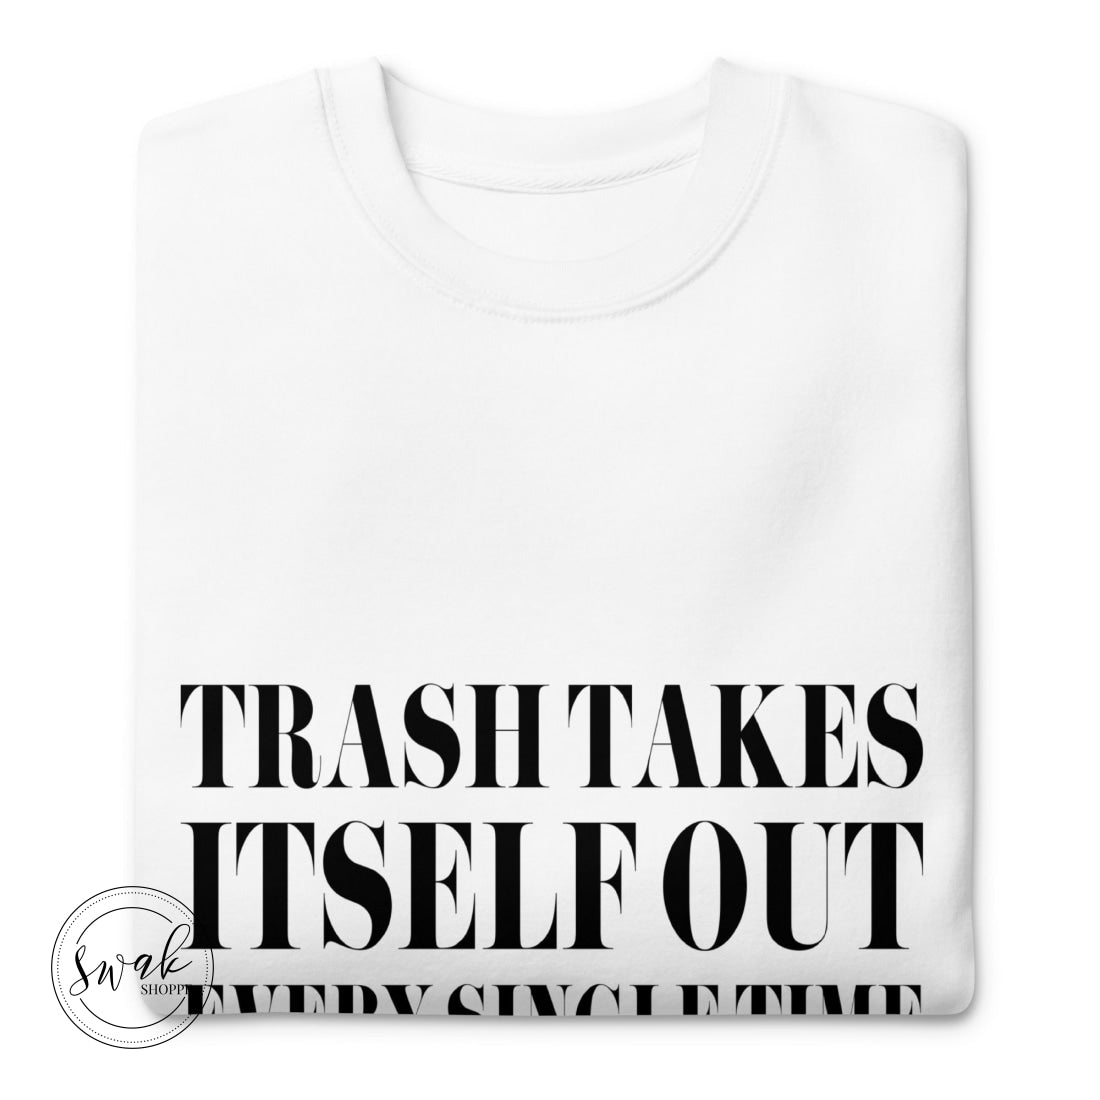 Trash Takes Itself Out Every Single Time Black Text Unisex Premium Sweatshirt